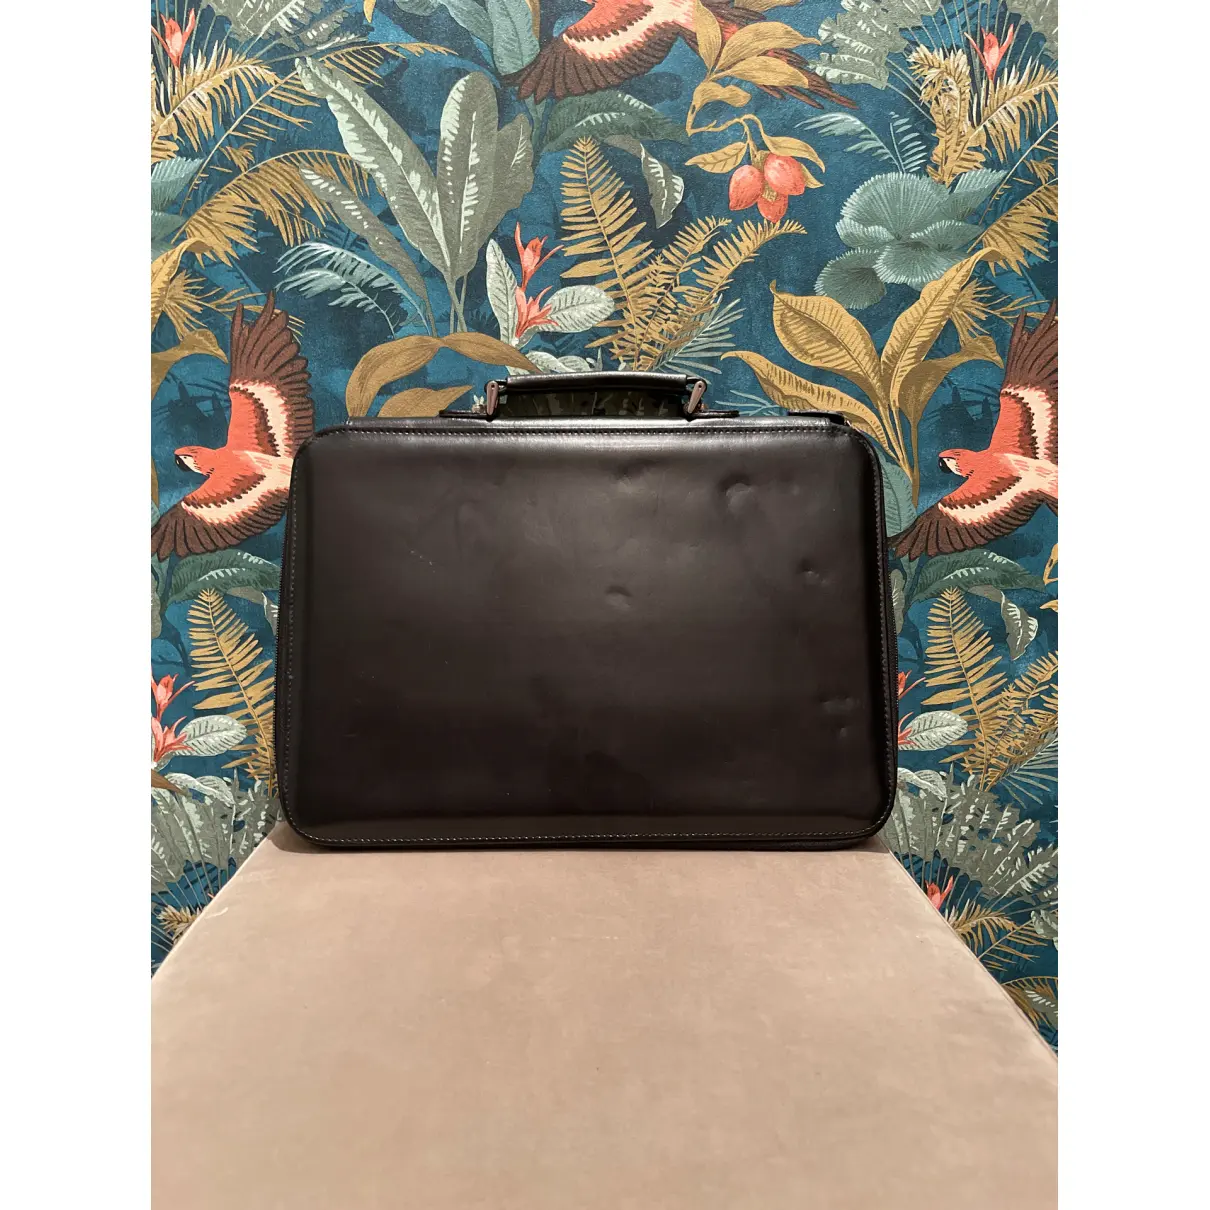 Buy Pollini Leather purse online - Vintage